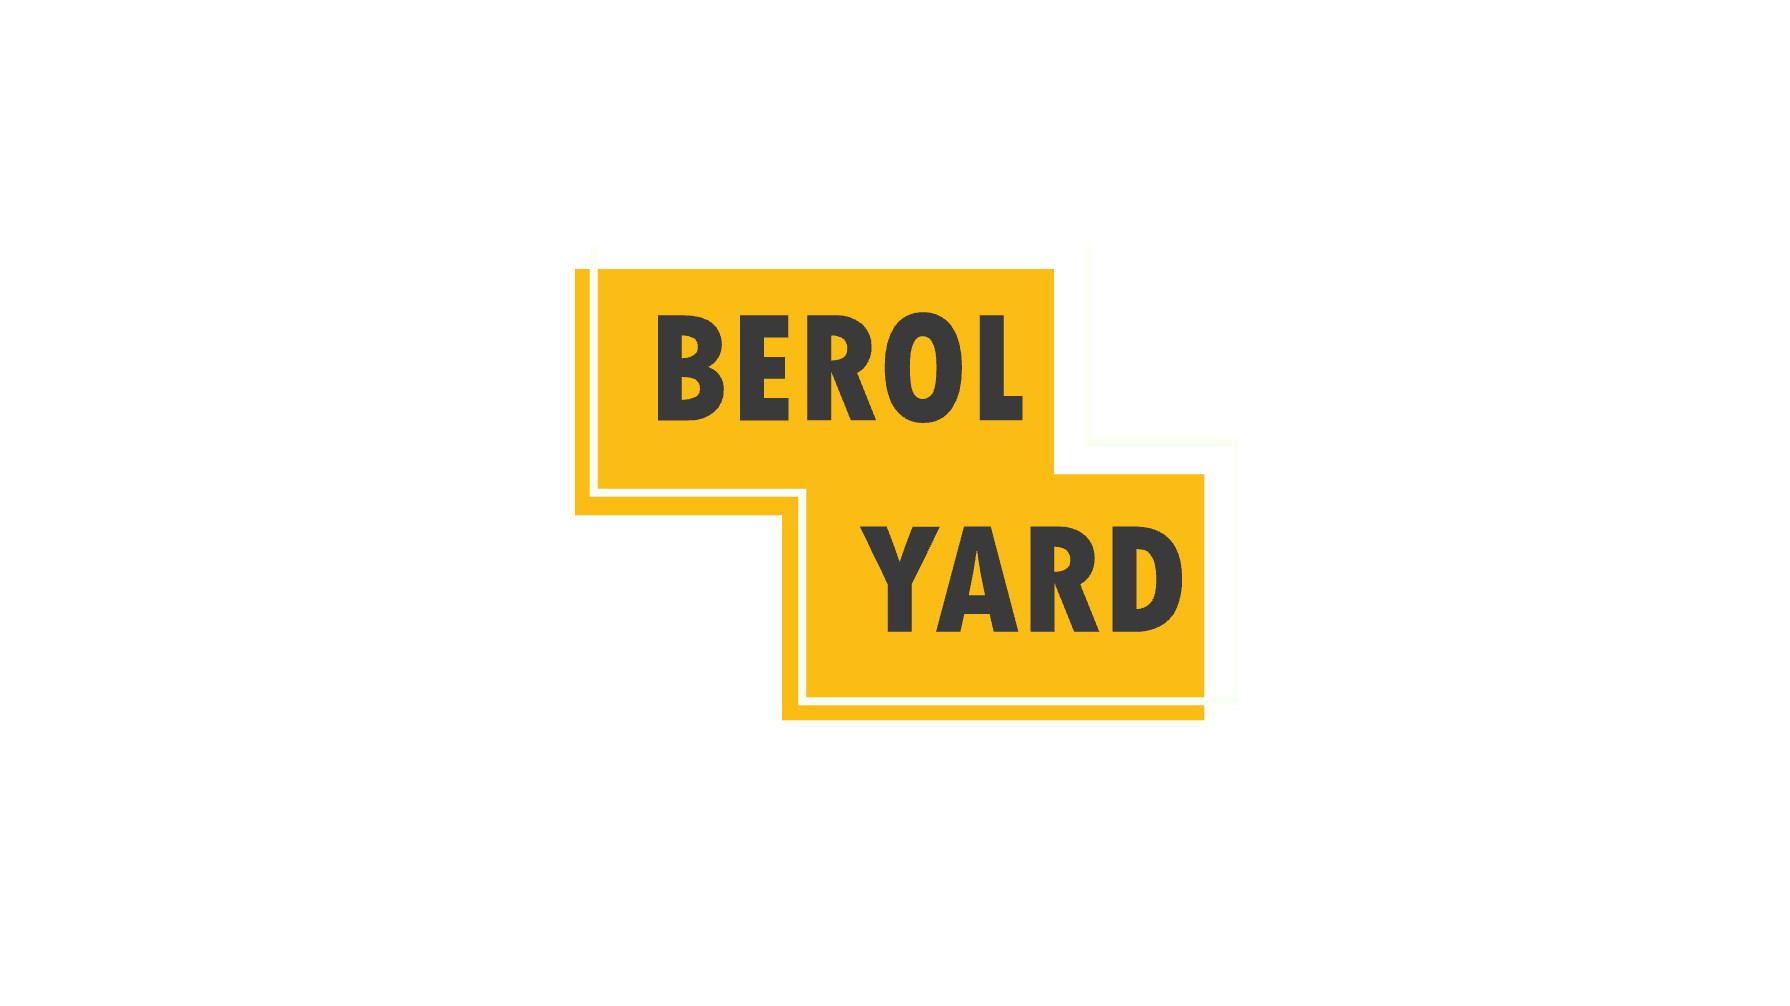 Berol Yard development logo.